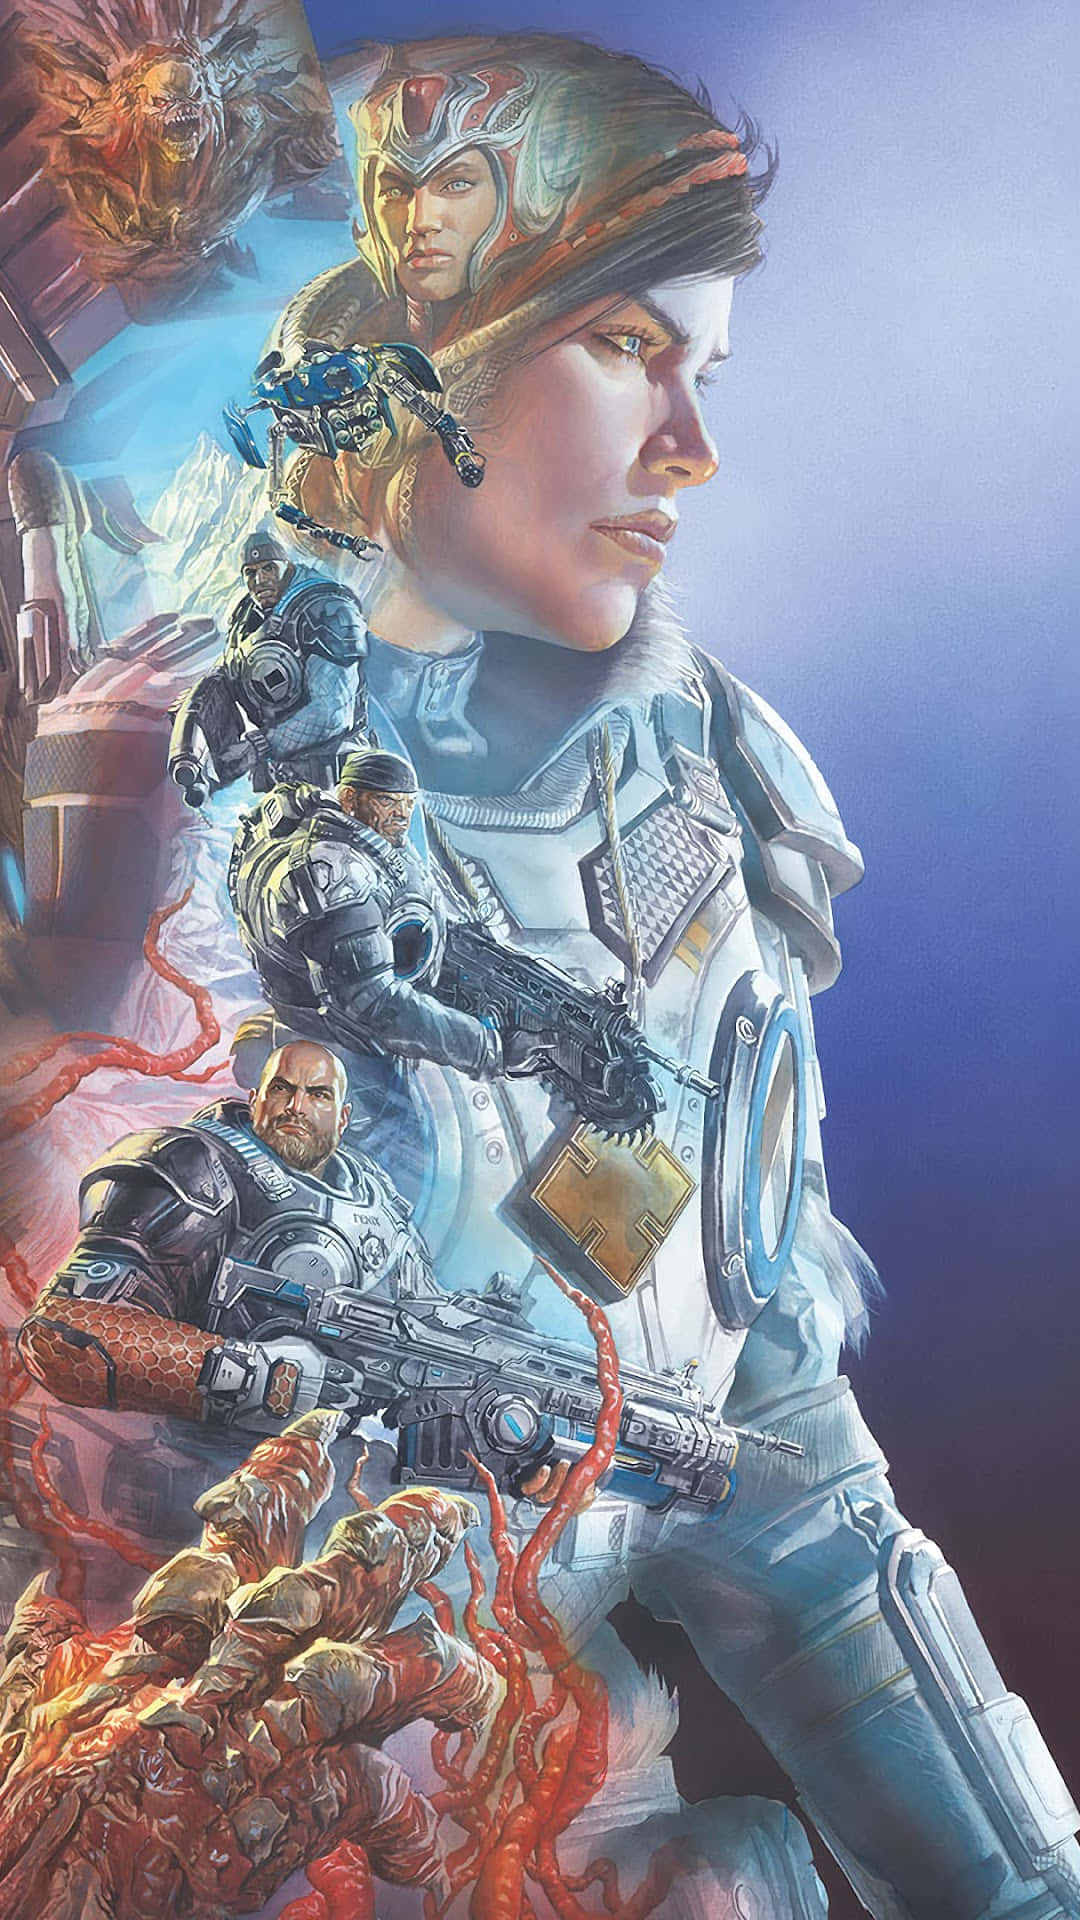 Et cover til Gears of War